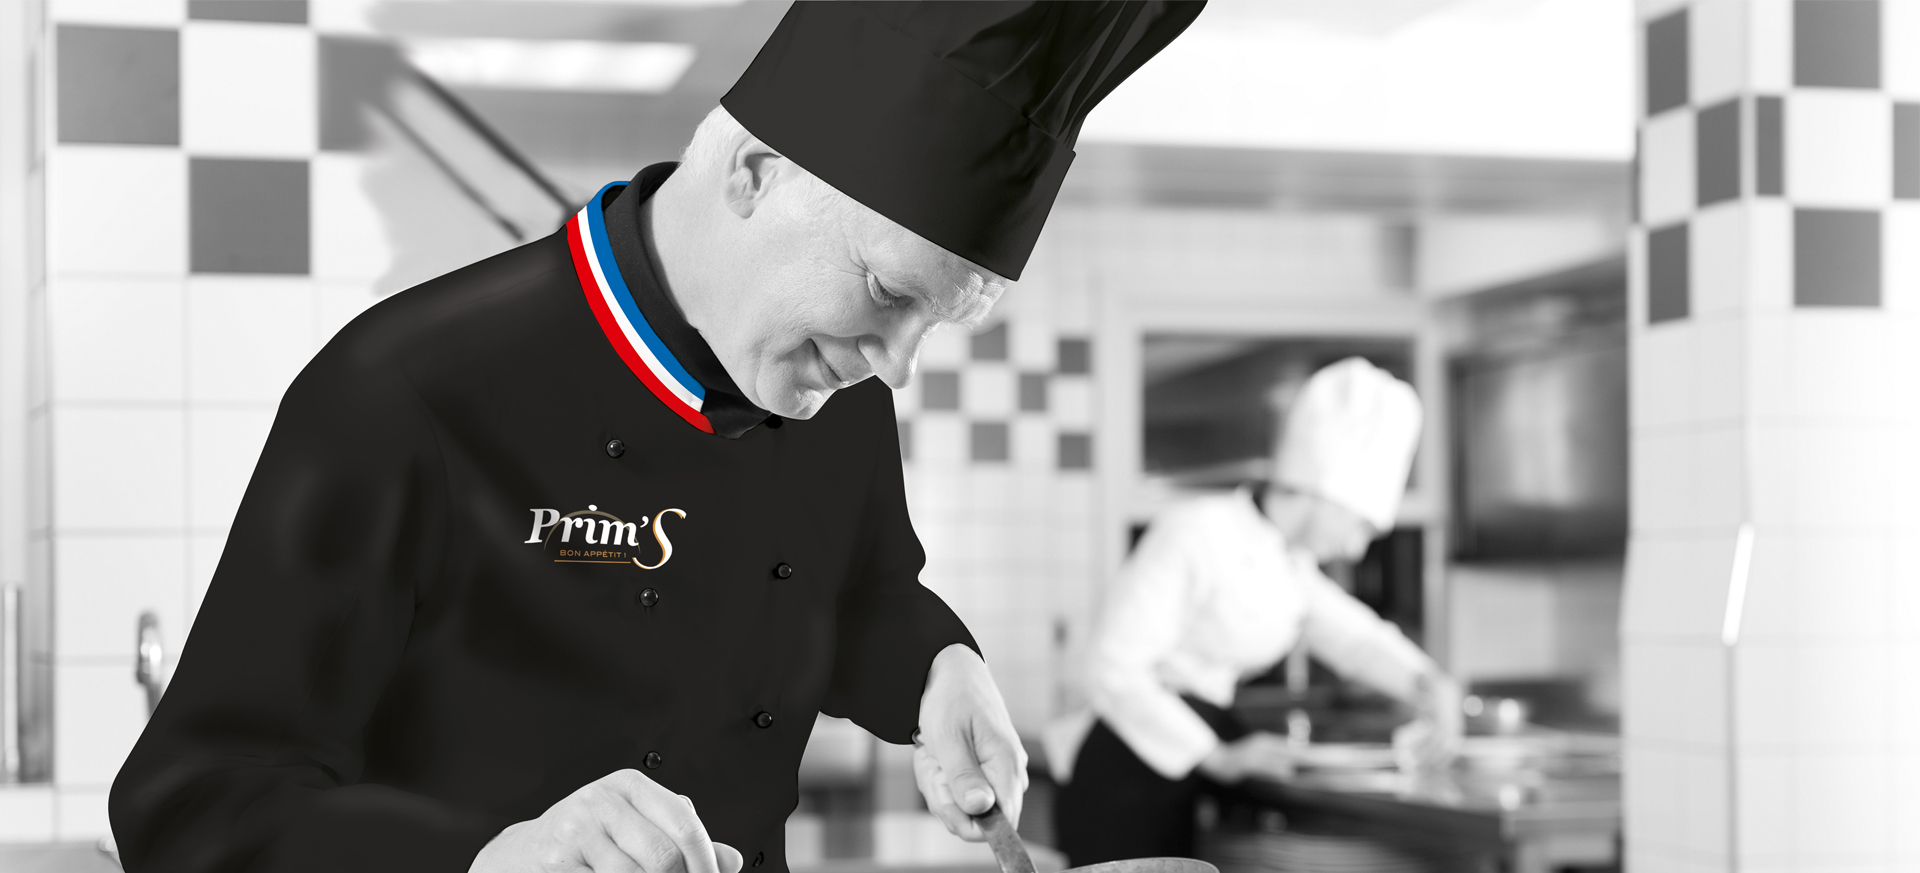 Prim'S, French gastronomy expertise